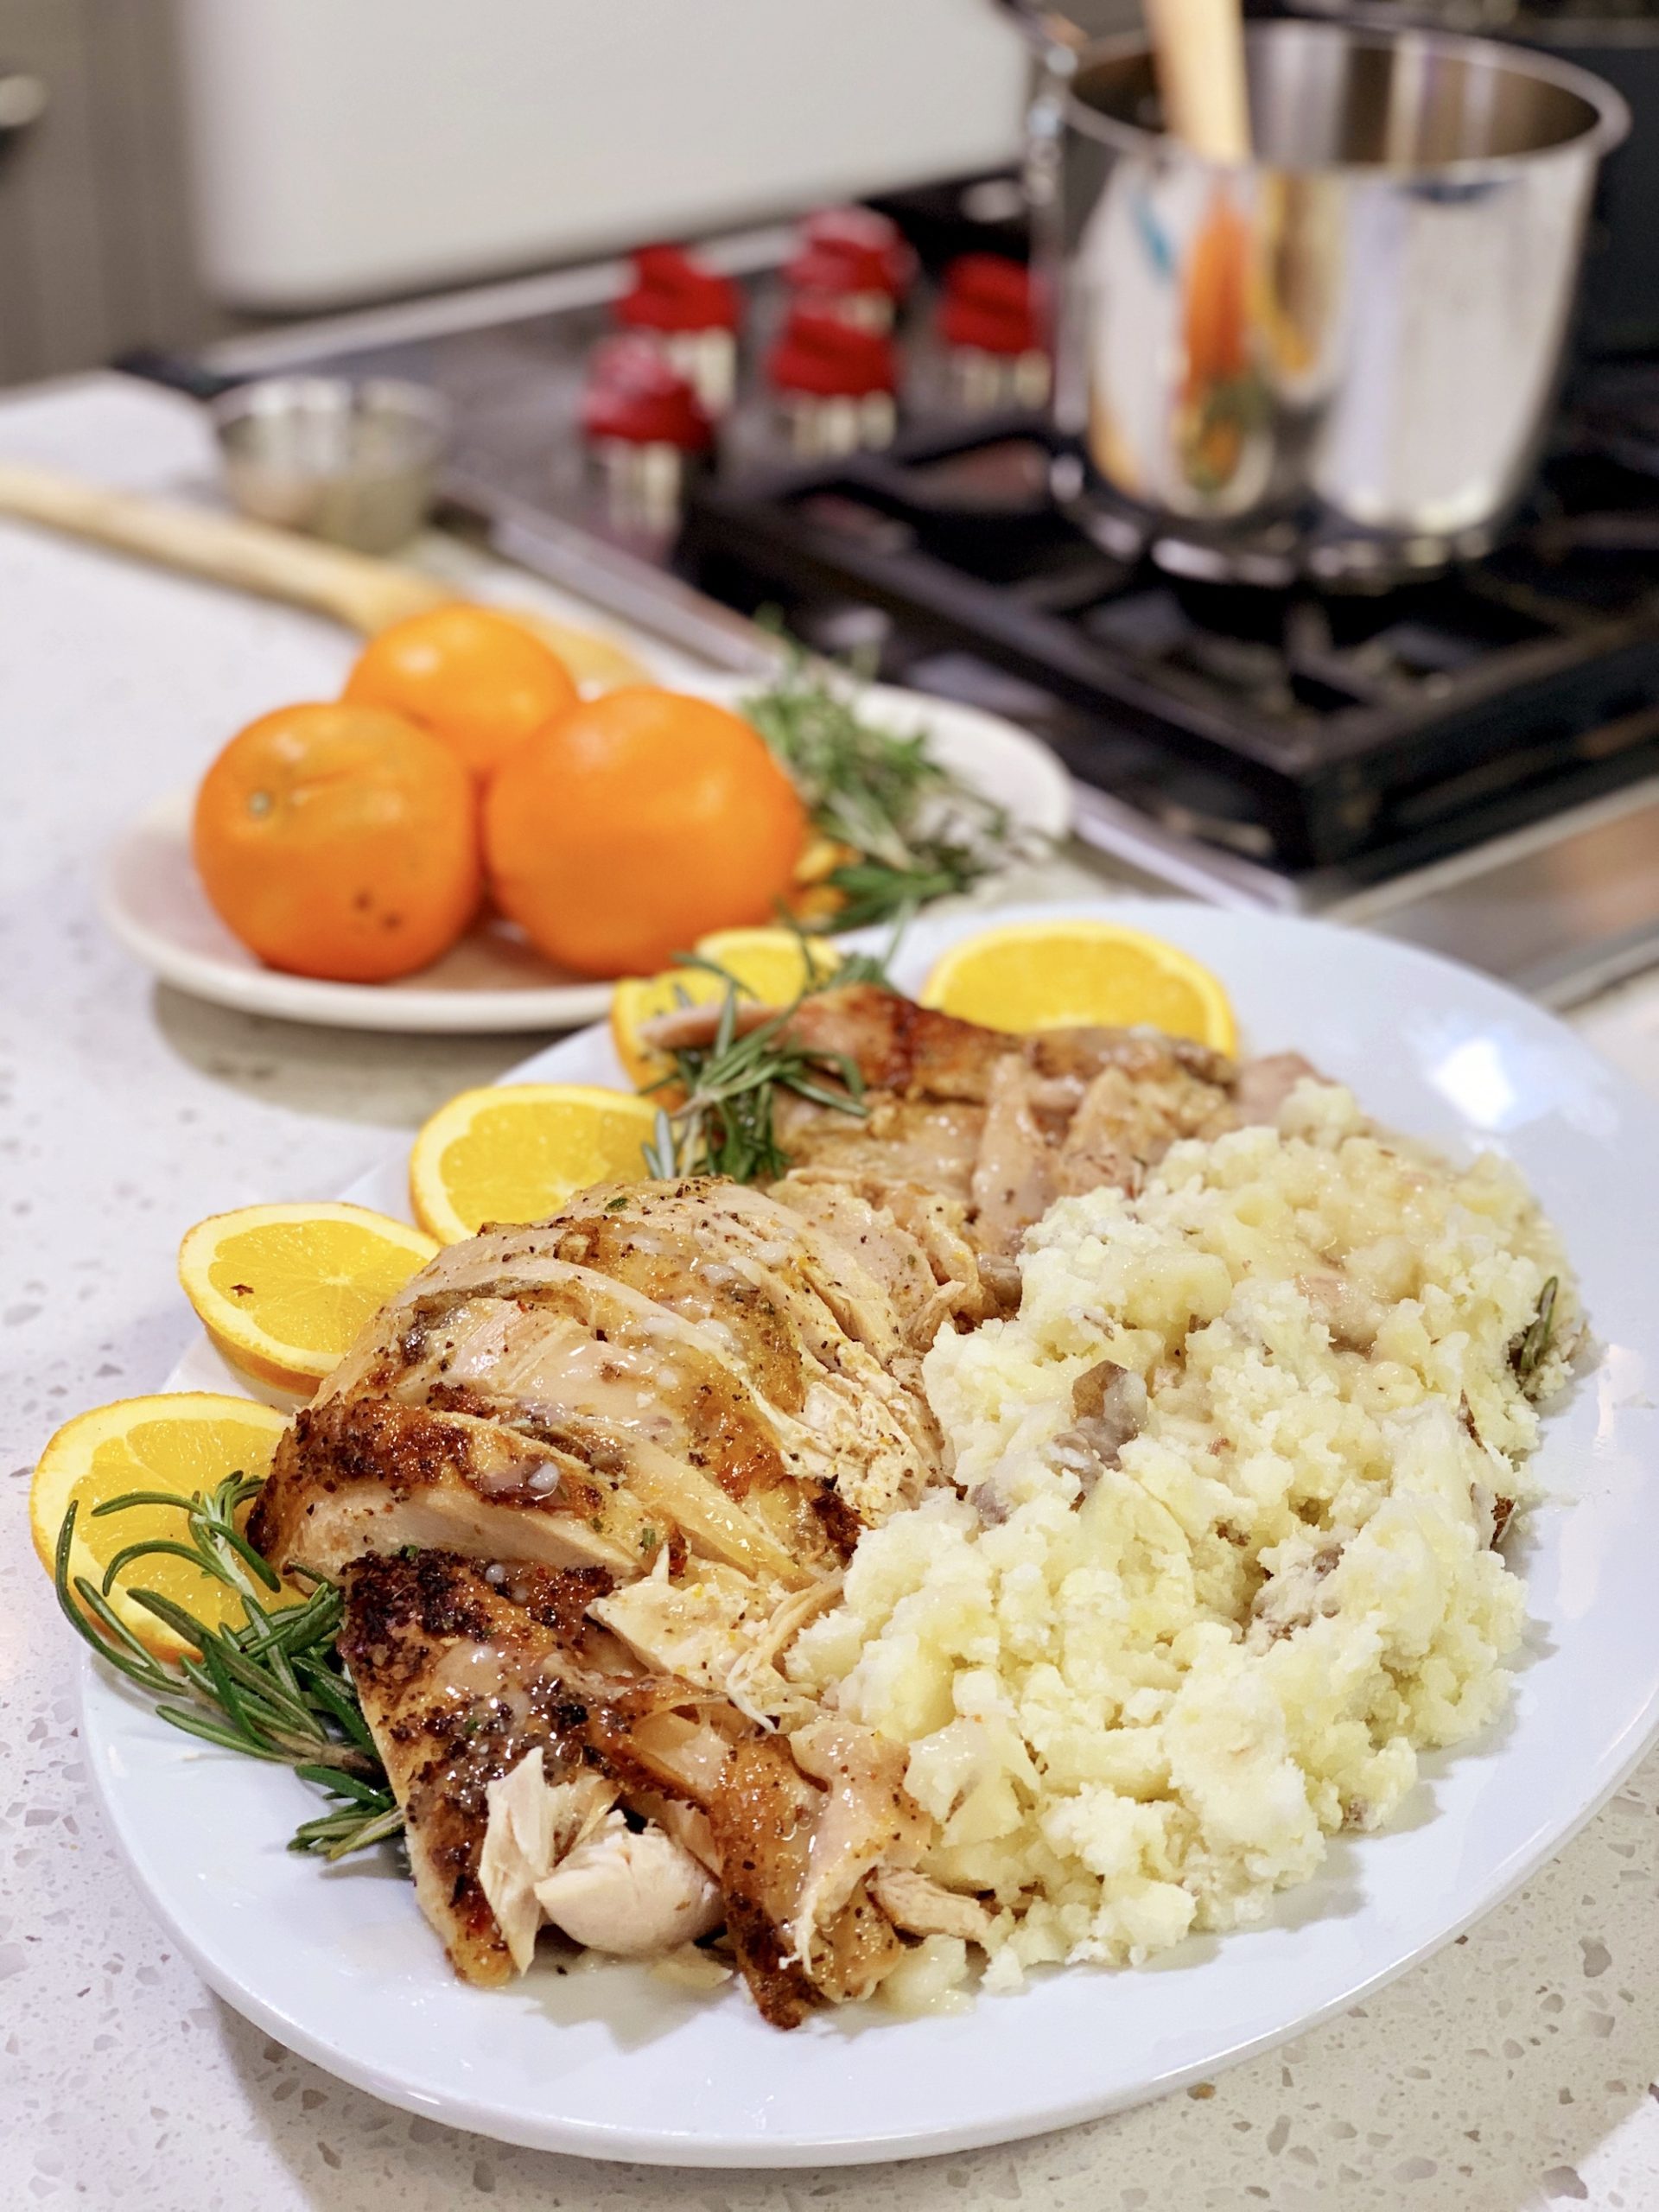 Rosemary Orange Turkey and Pan Gravy - cooking with chef bryan